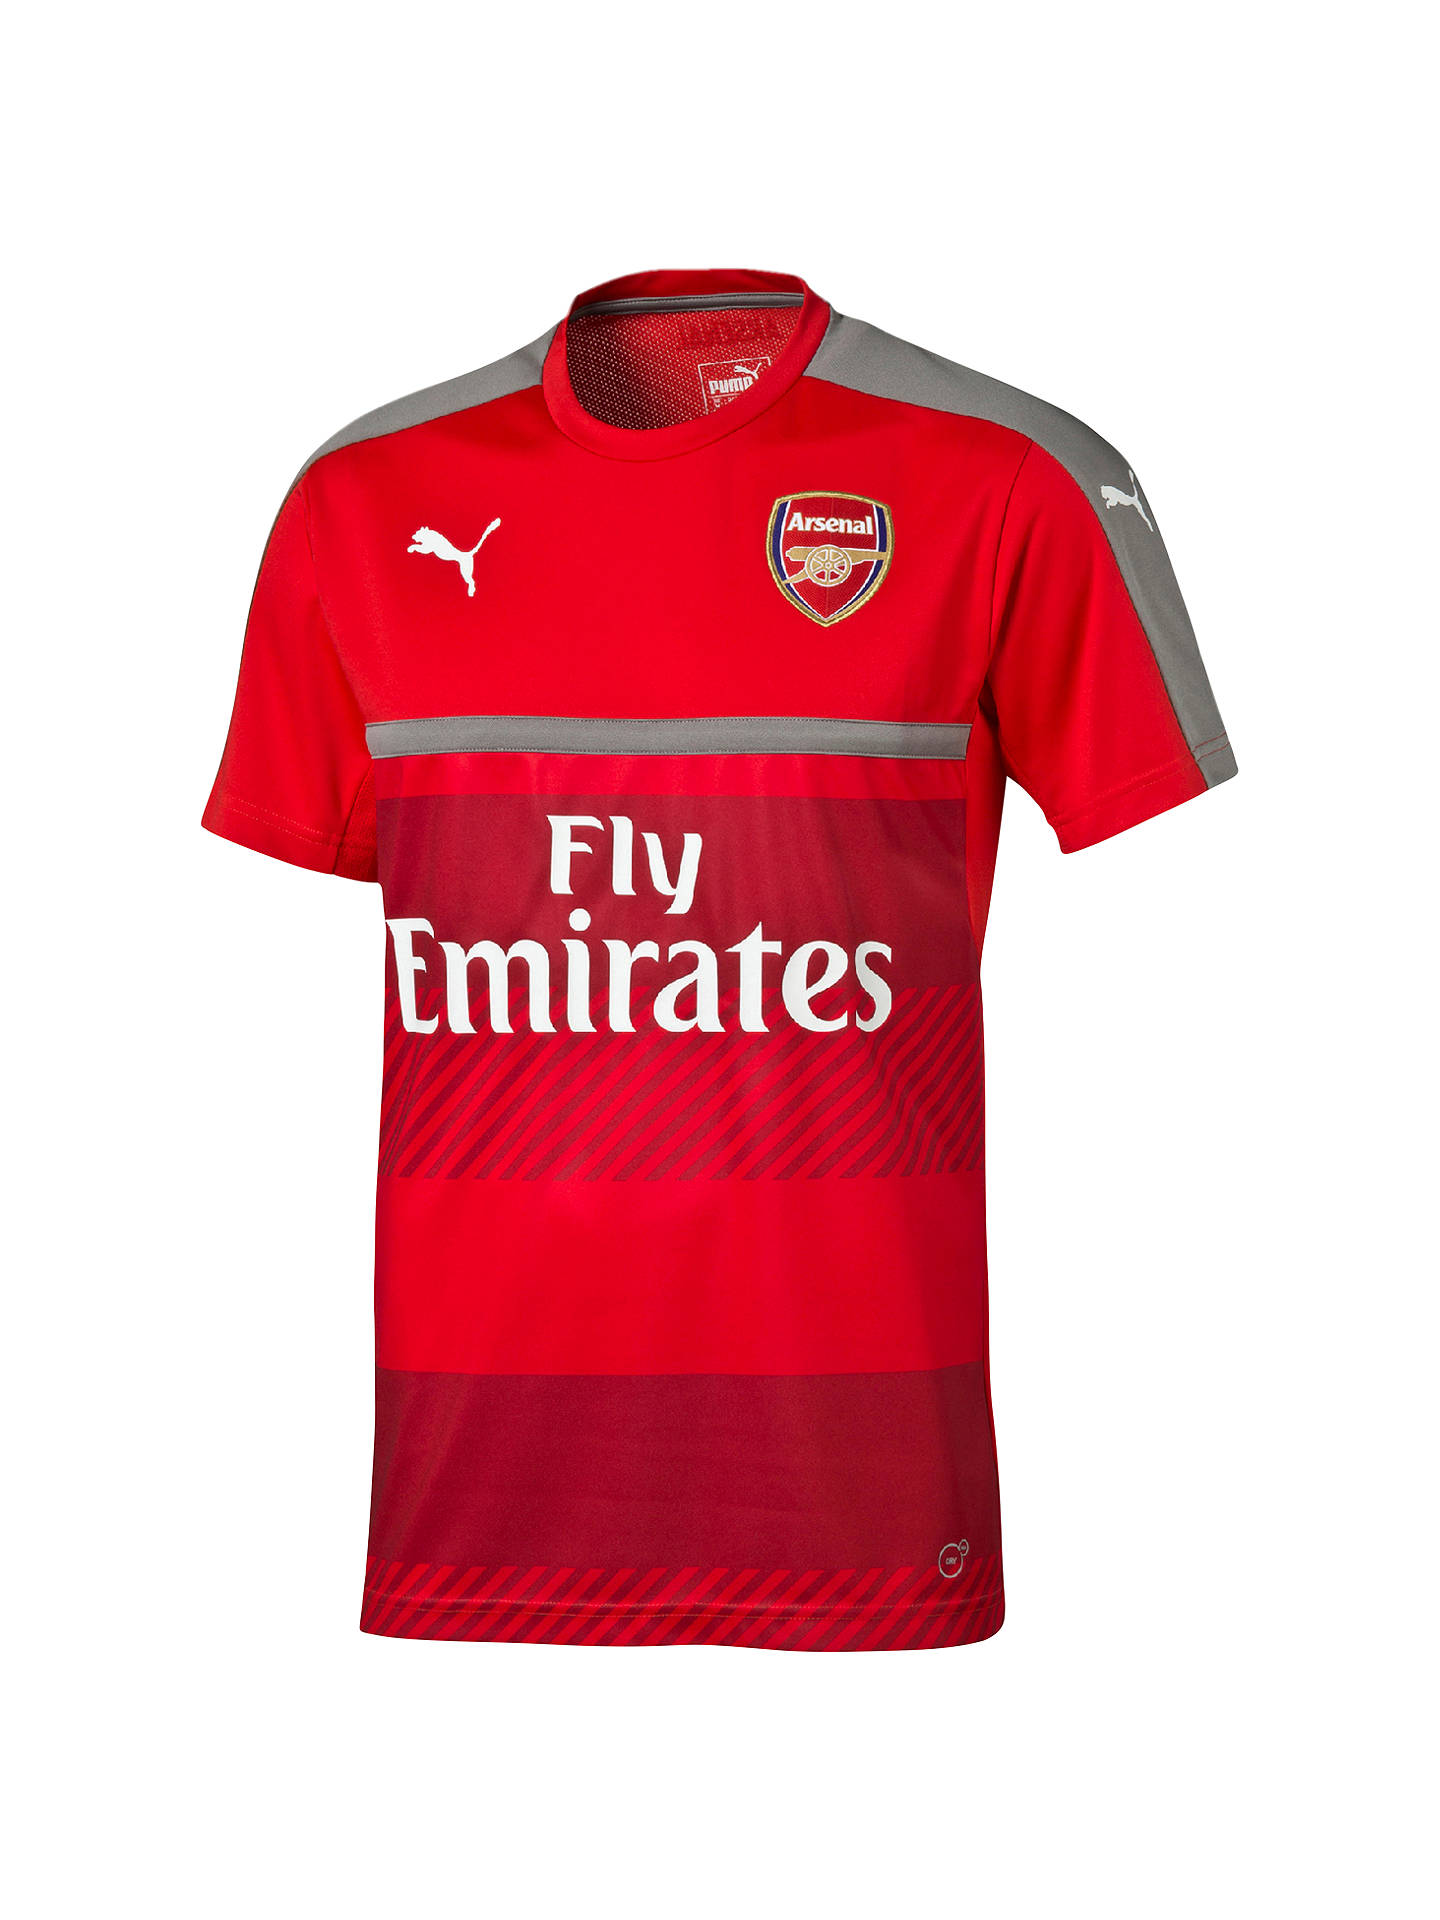 Puma Children S Arsenal F C 2016 17 Training Football Shirt Red